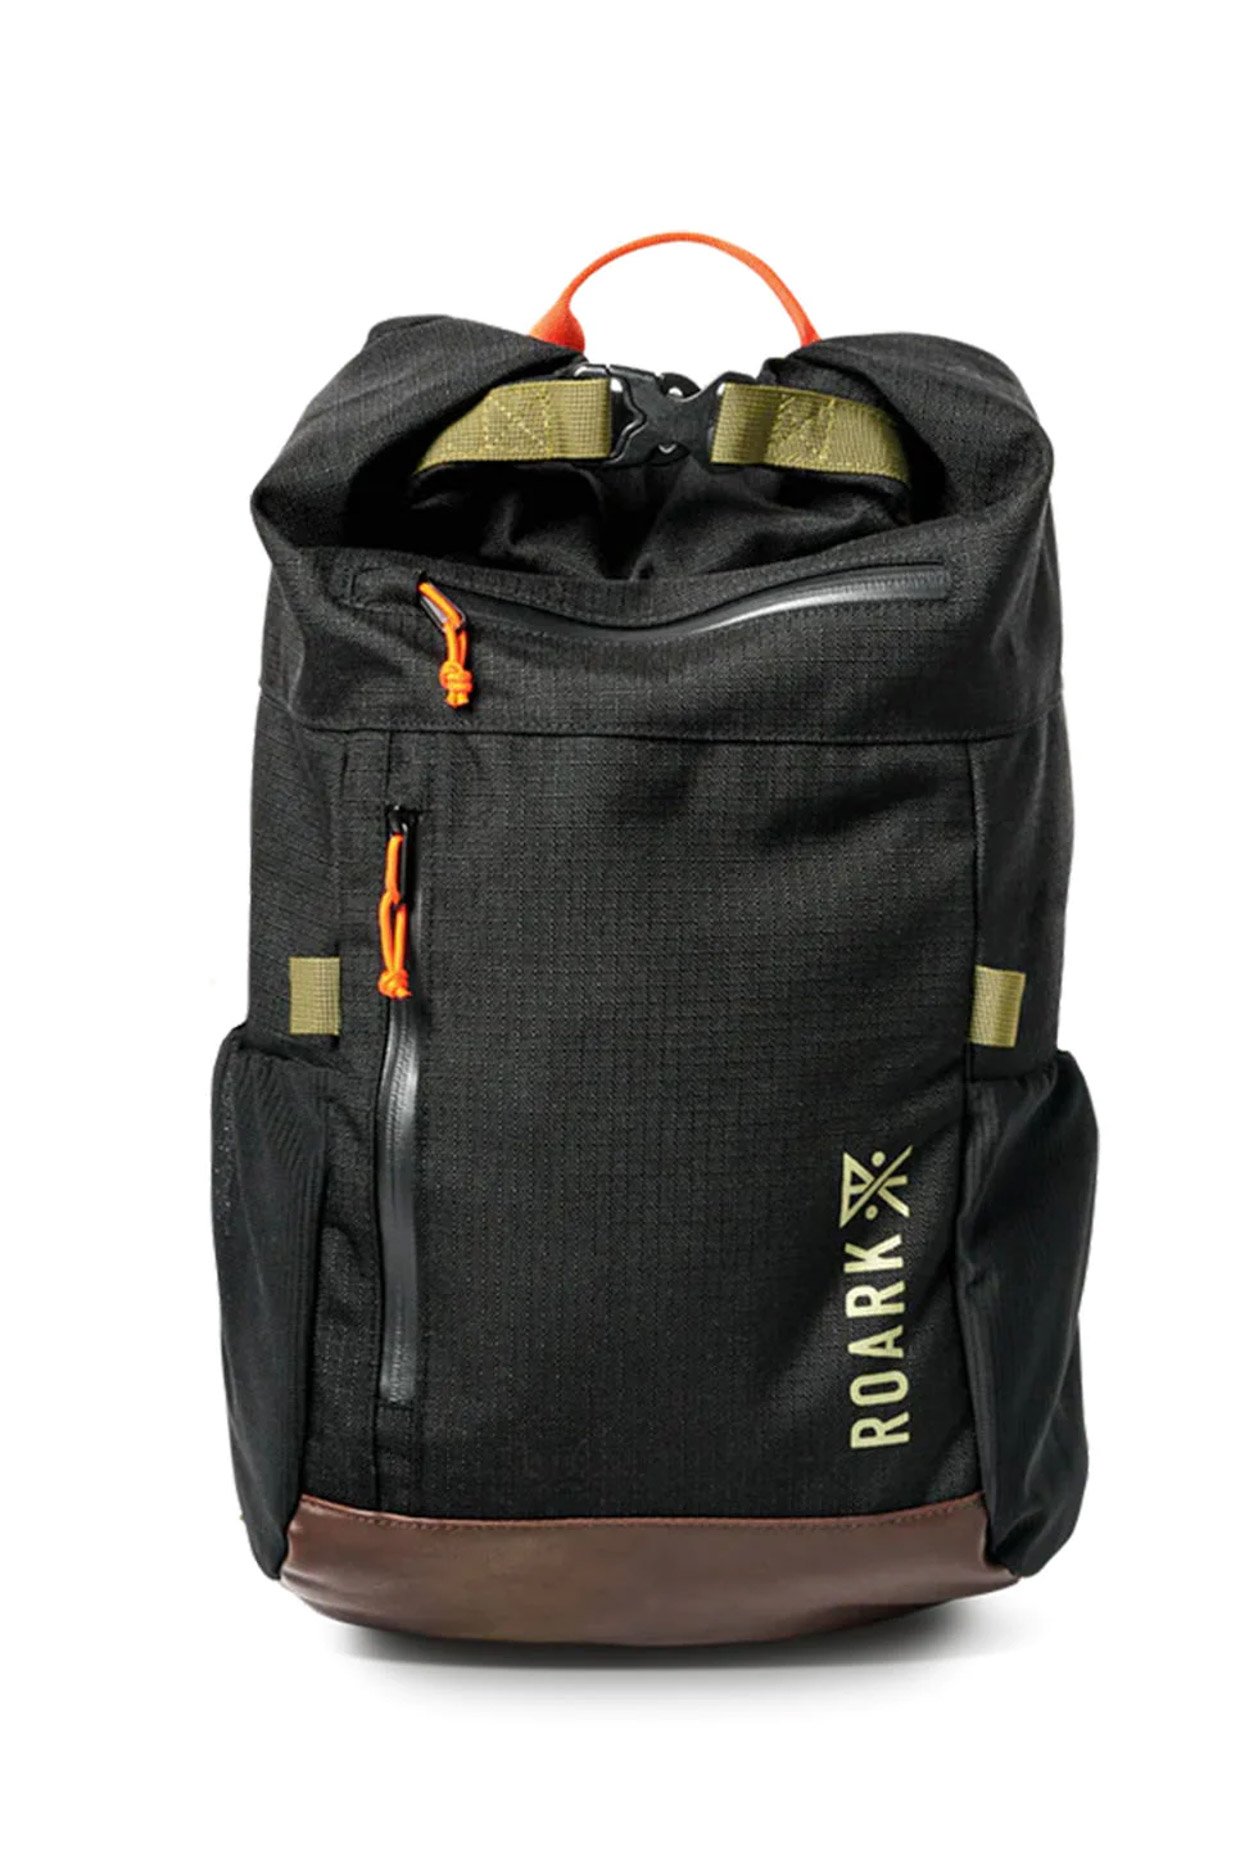 Roark Revival Backpack